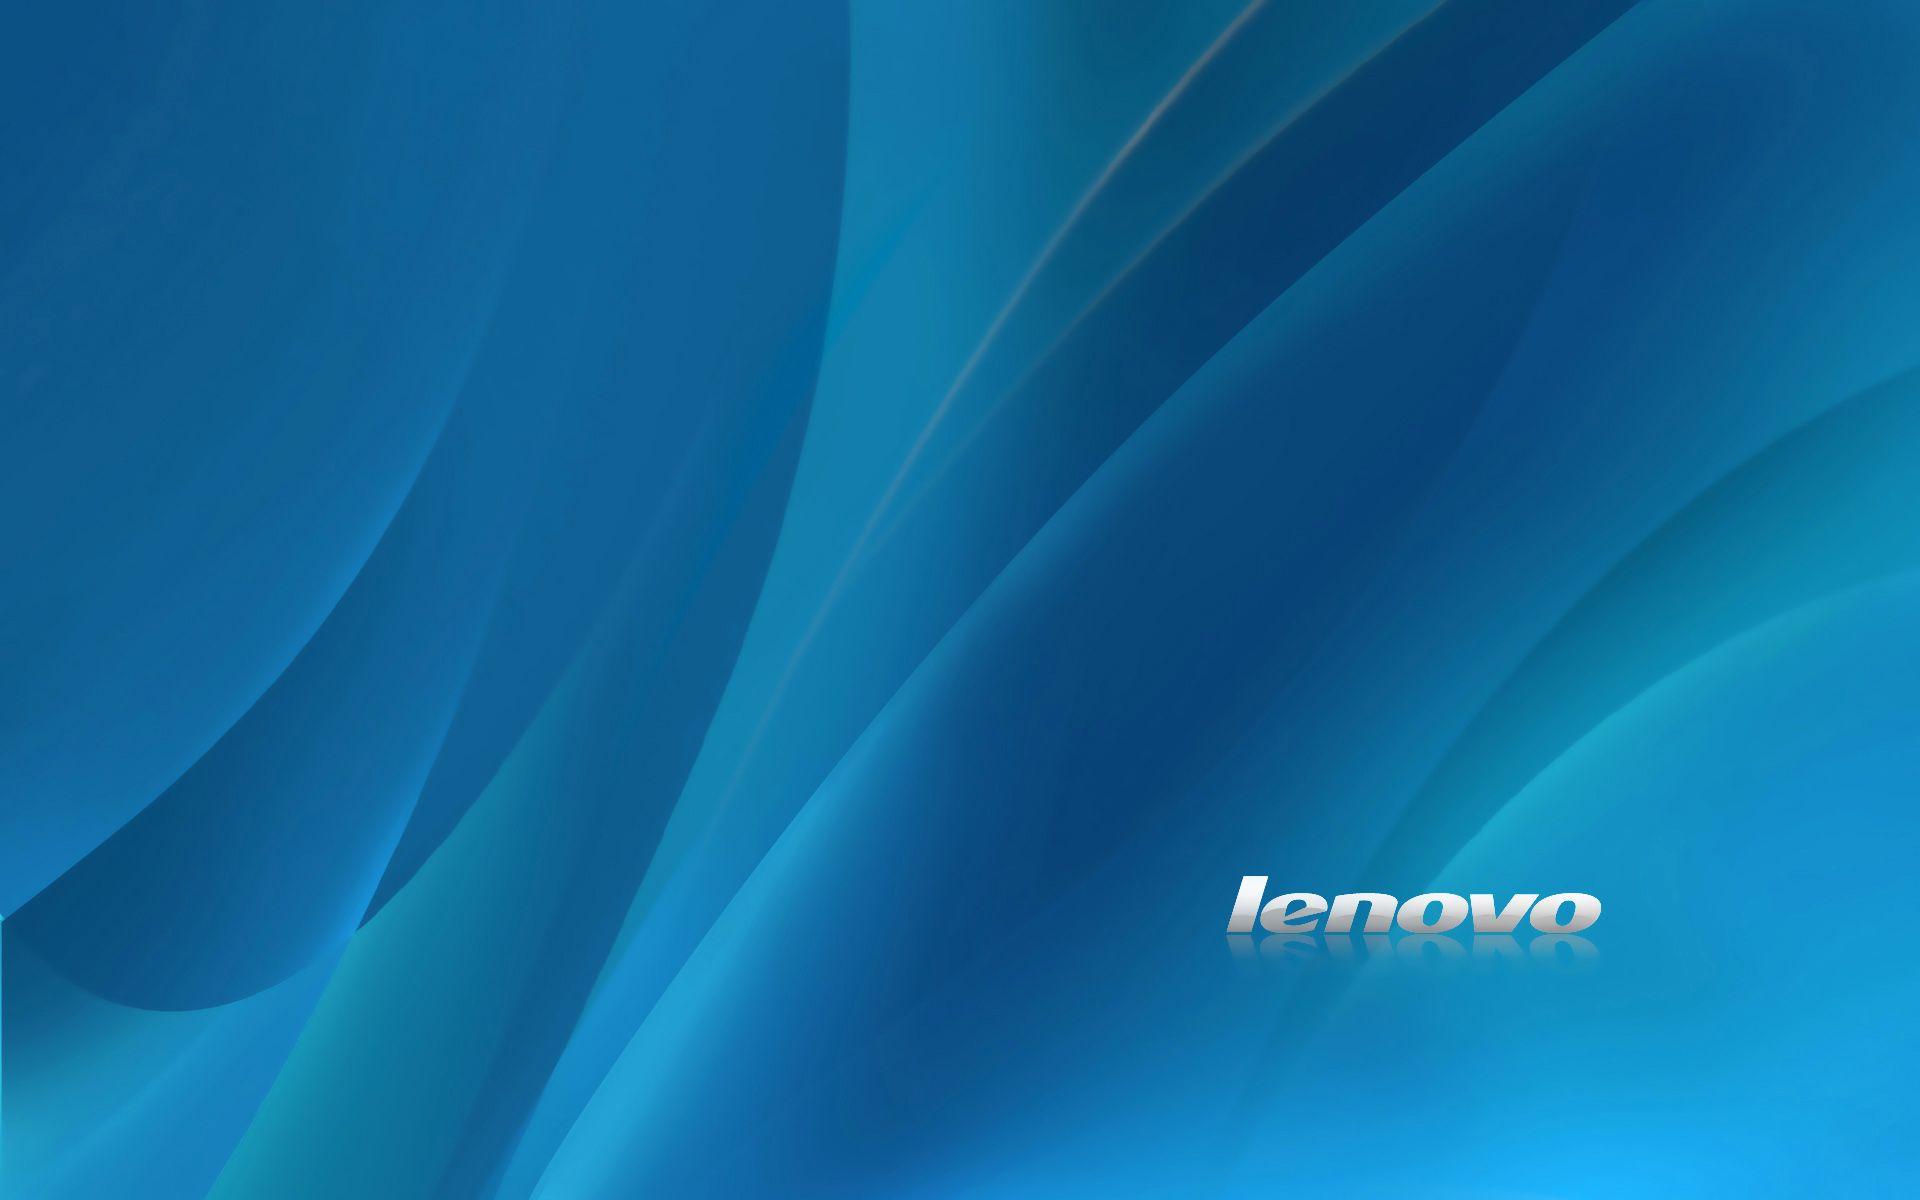 Lenovo Wallpaper, Image, Wallpaper Of Lenovo In HD Quality: D Screens